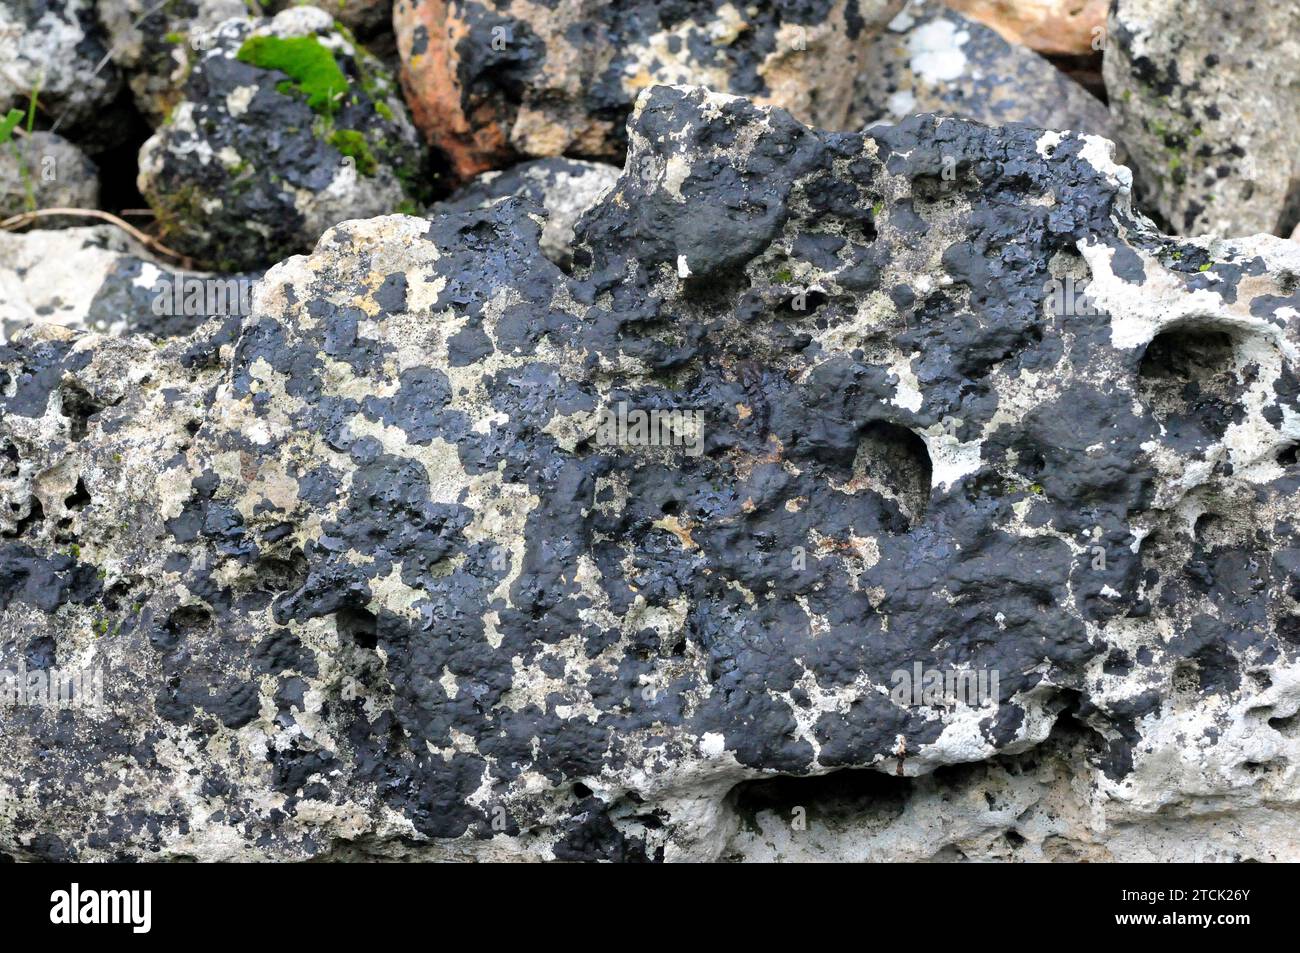 Verrucaria nigrescens is a black crustose lichen that grows on limestone rocks. This photo was taken in Menorca, Balearic Islands, Spain. Stock Photo